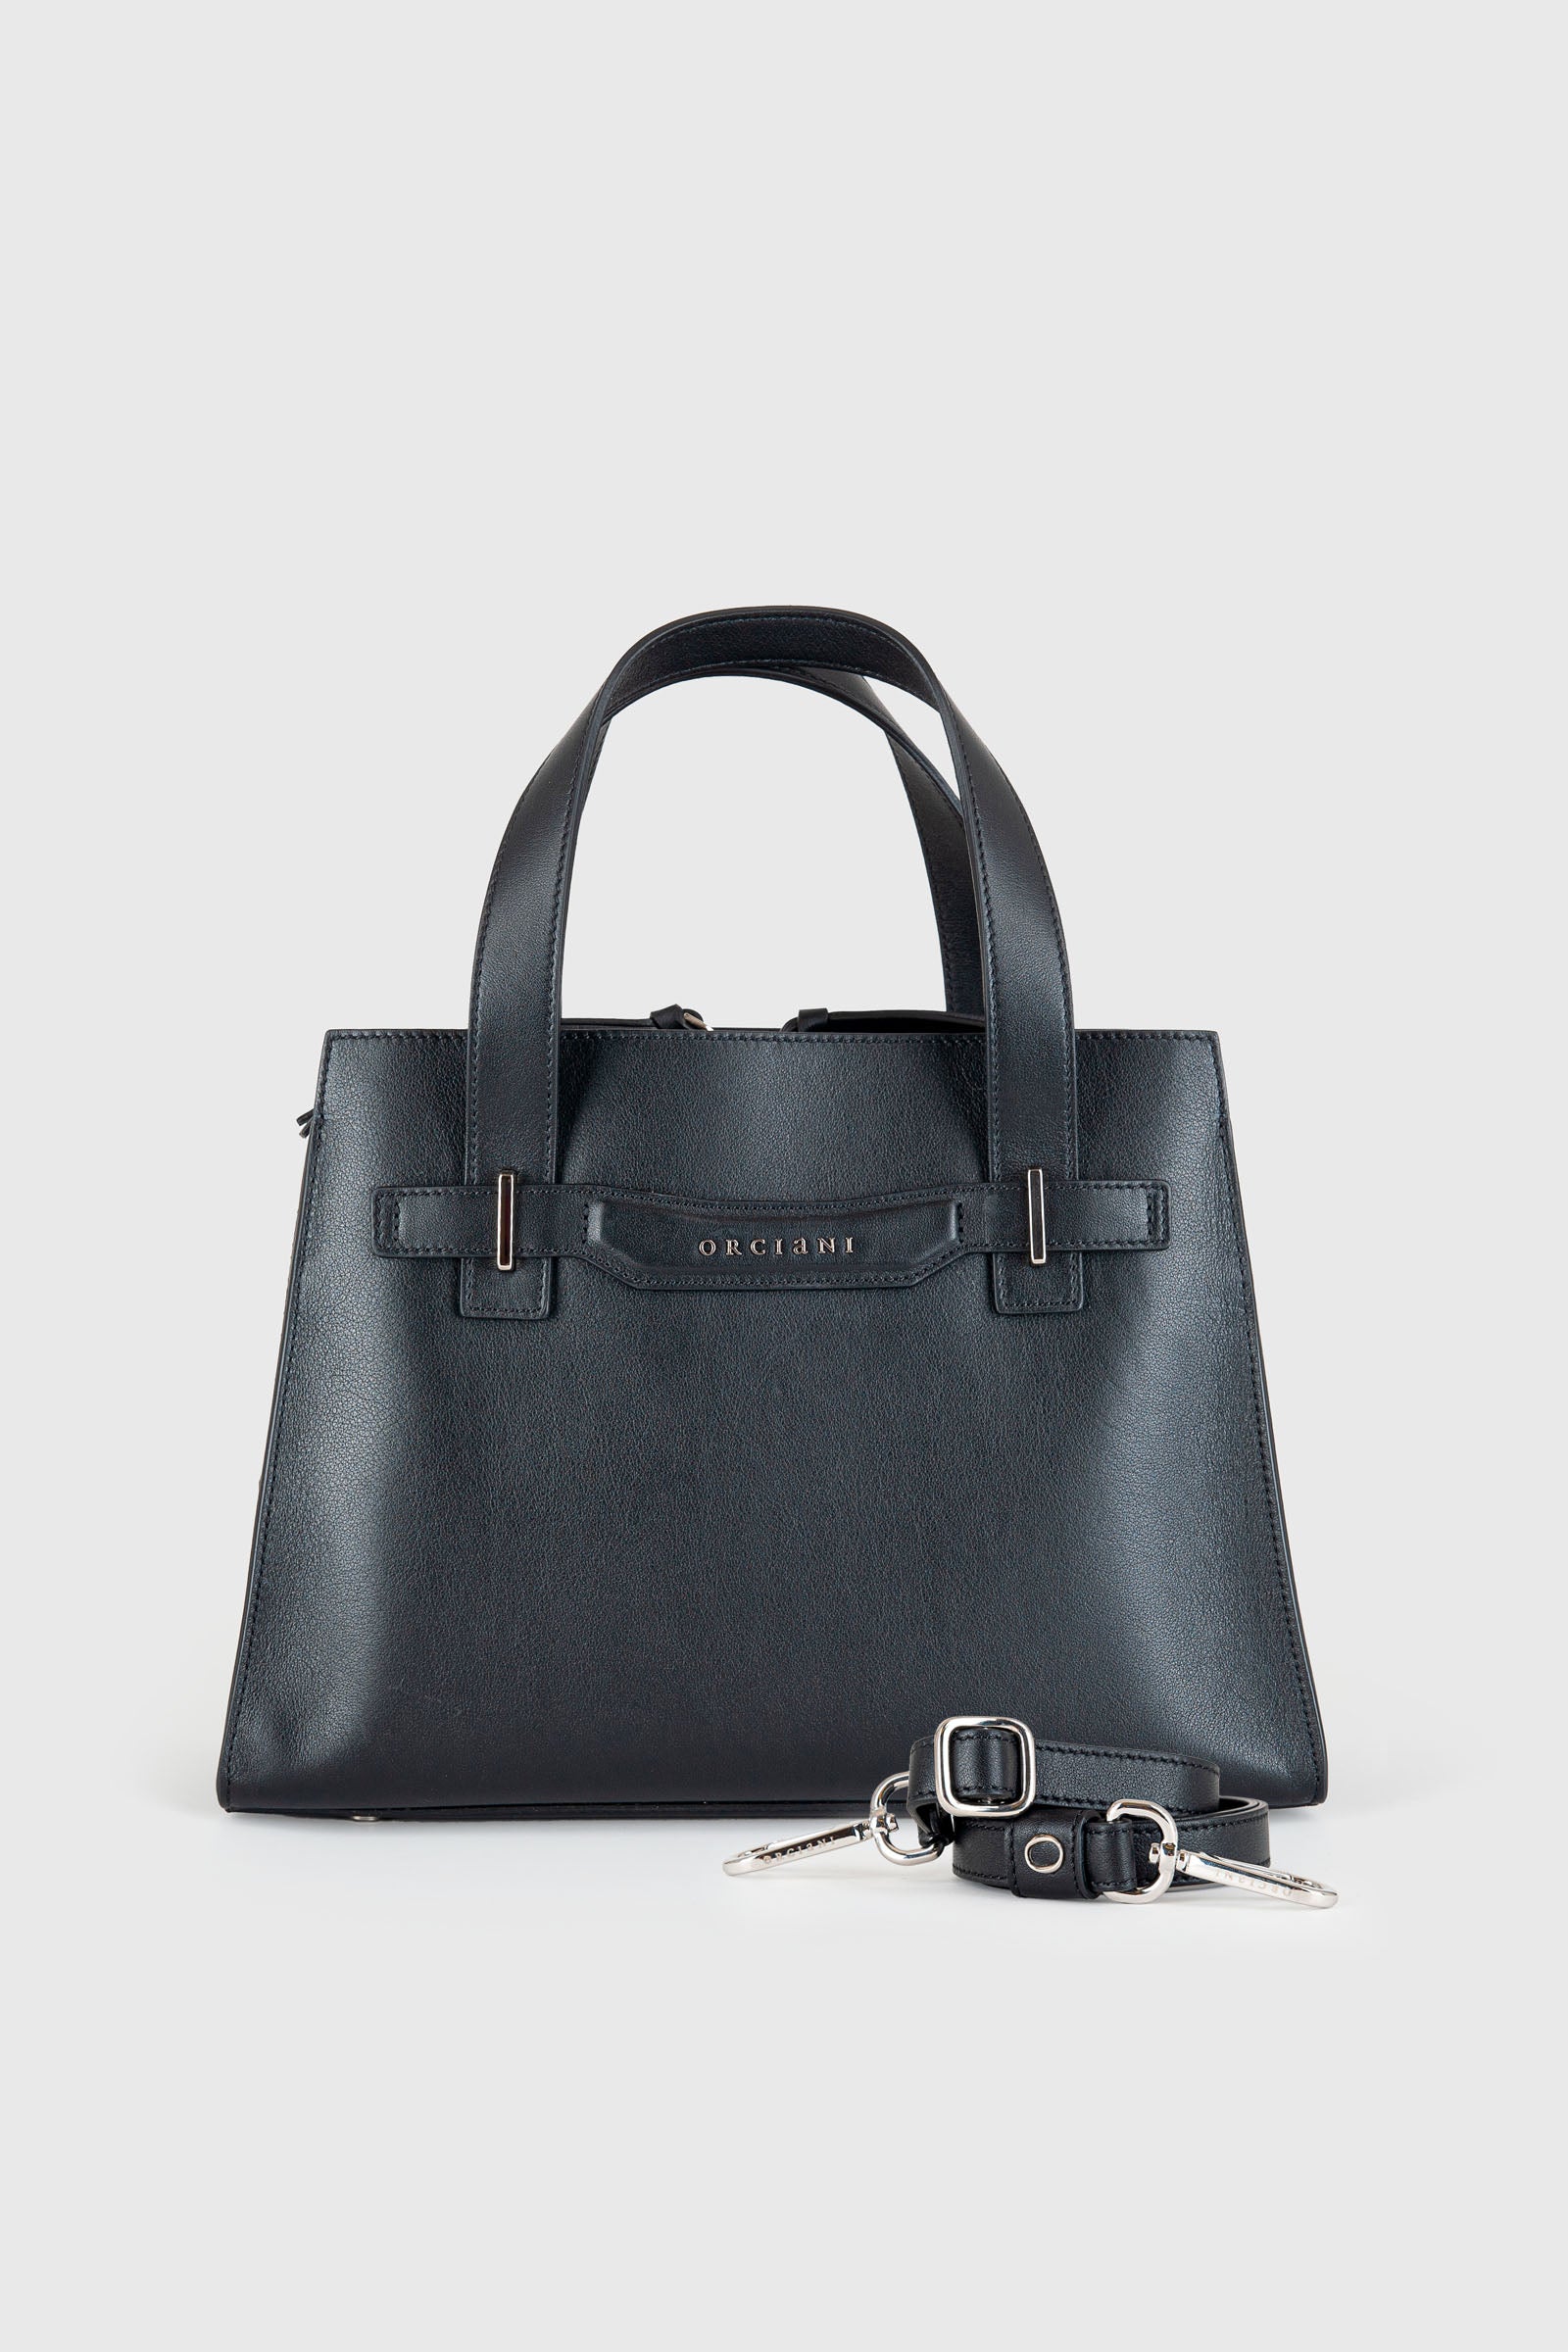 Orciani Leather Bag Black Out Black Woman B02147BLACK - 4